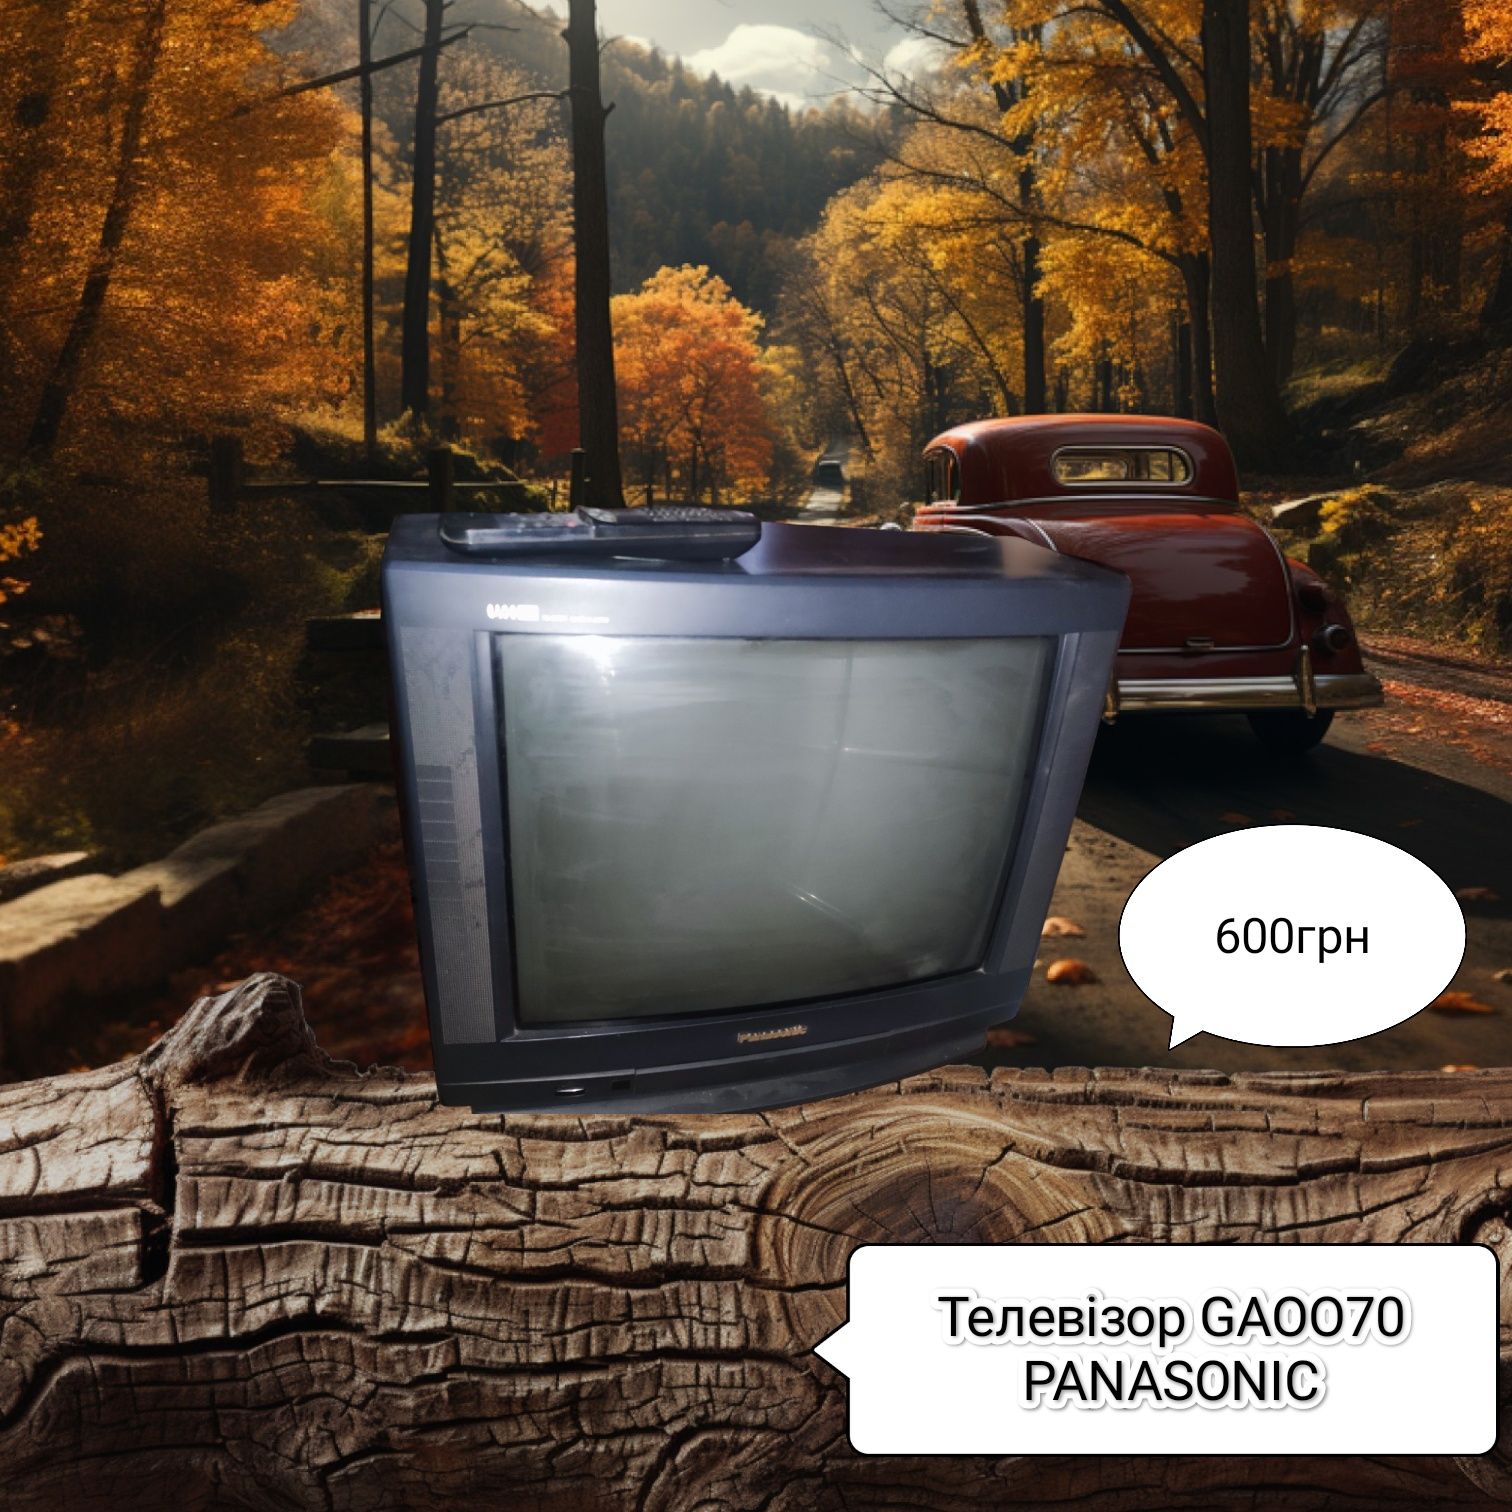 Телевізори LG Panasonic Gaoo70, LG, JVC, Delton